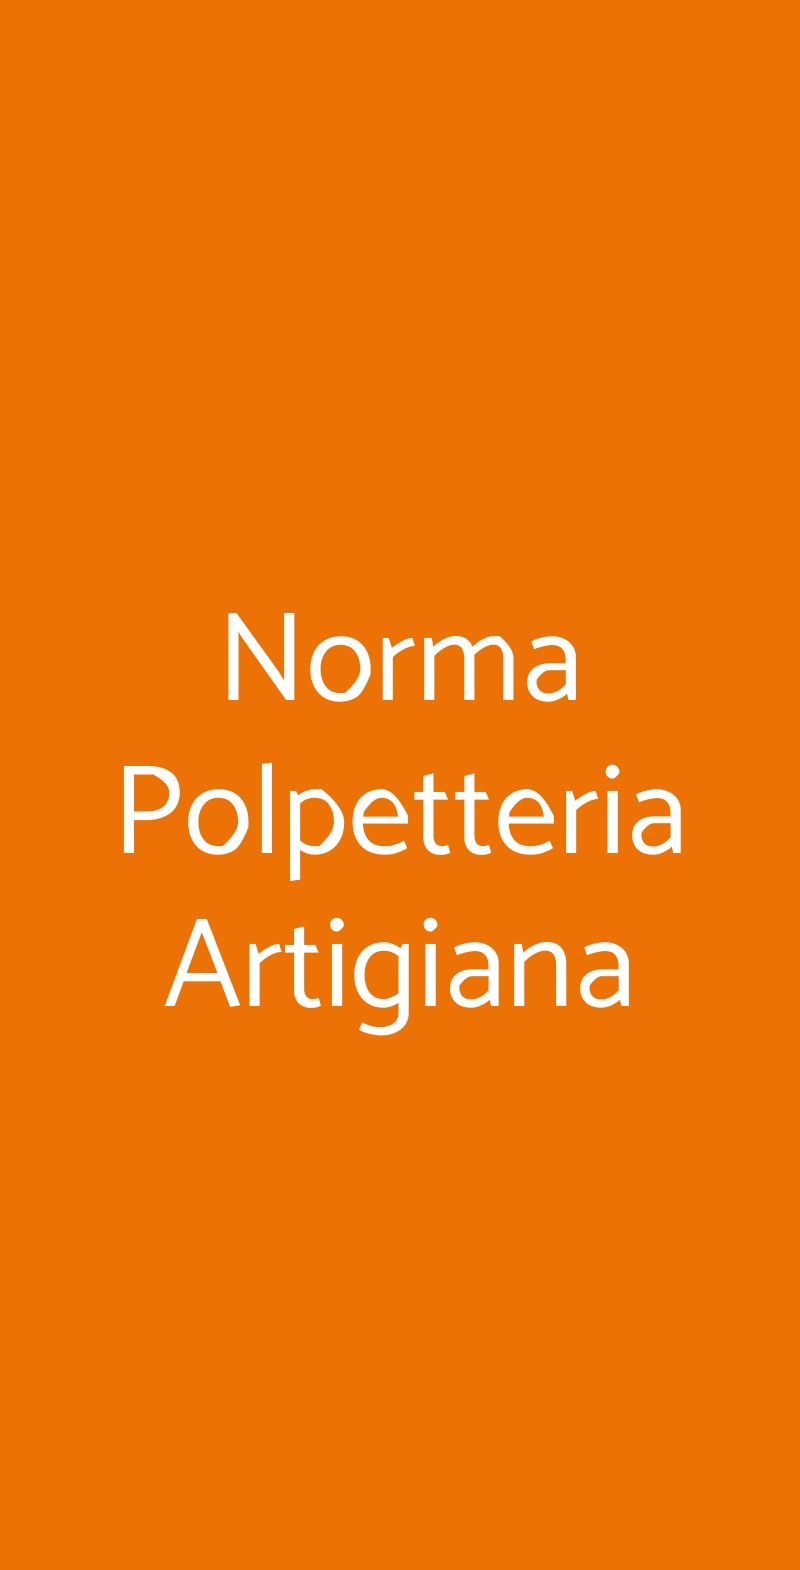 Norma Polpetteria Artigiana Torino menù 1 pagina